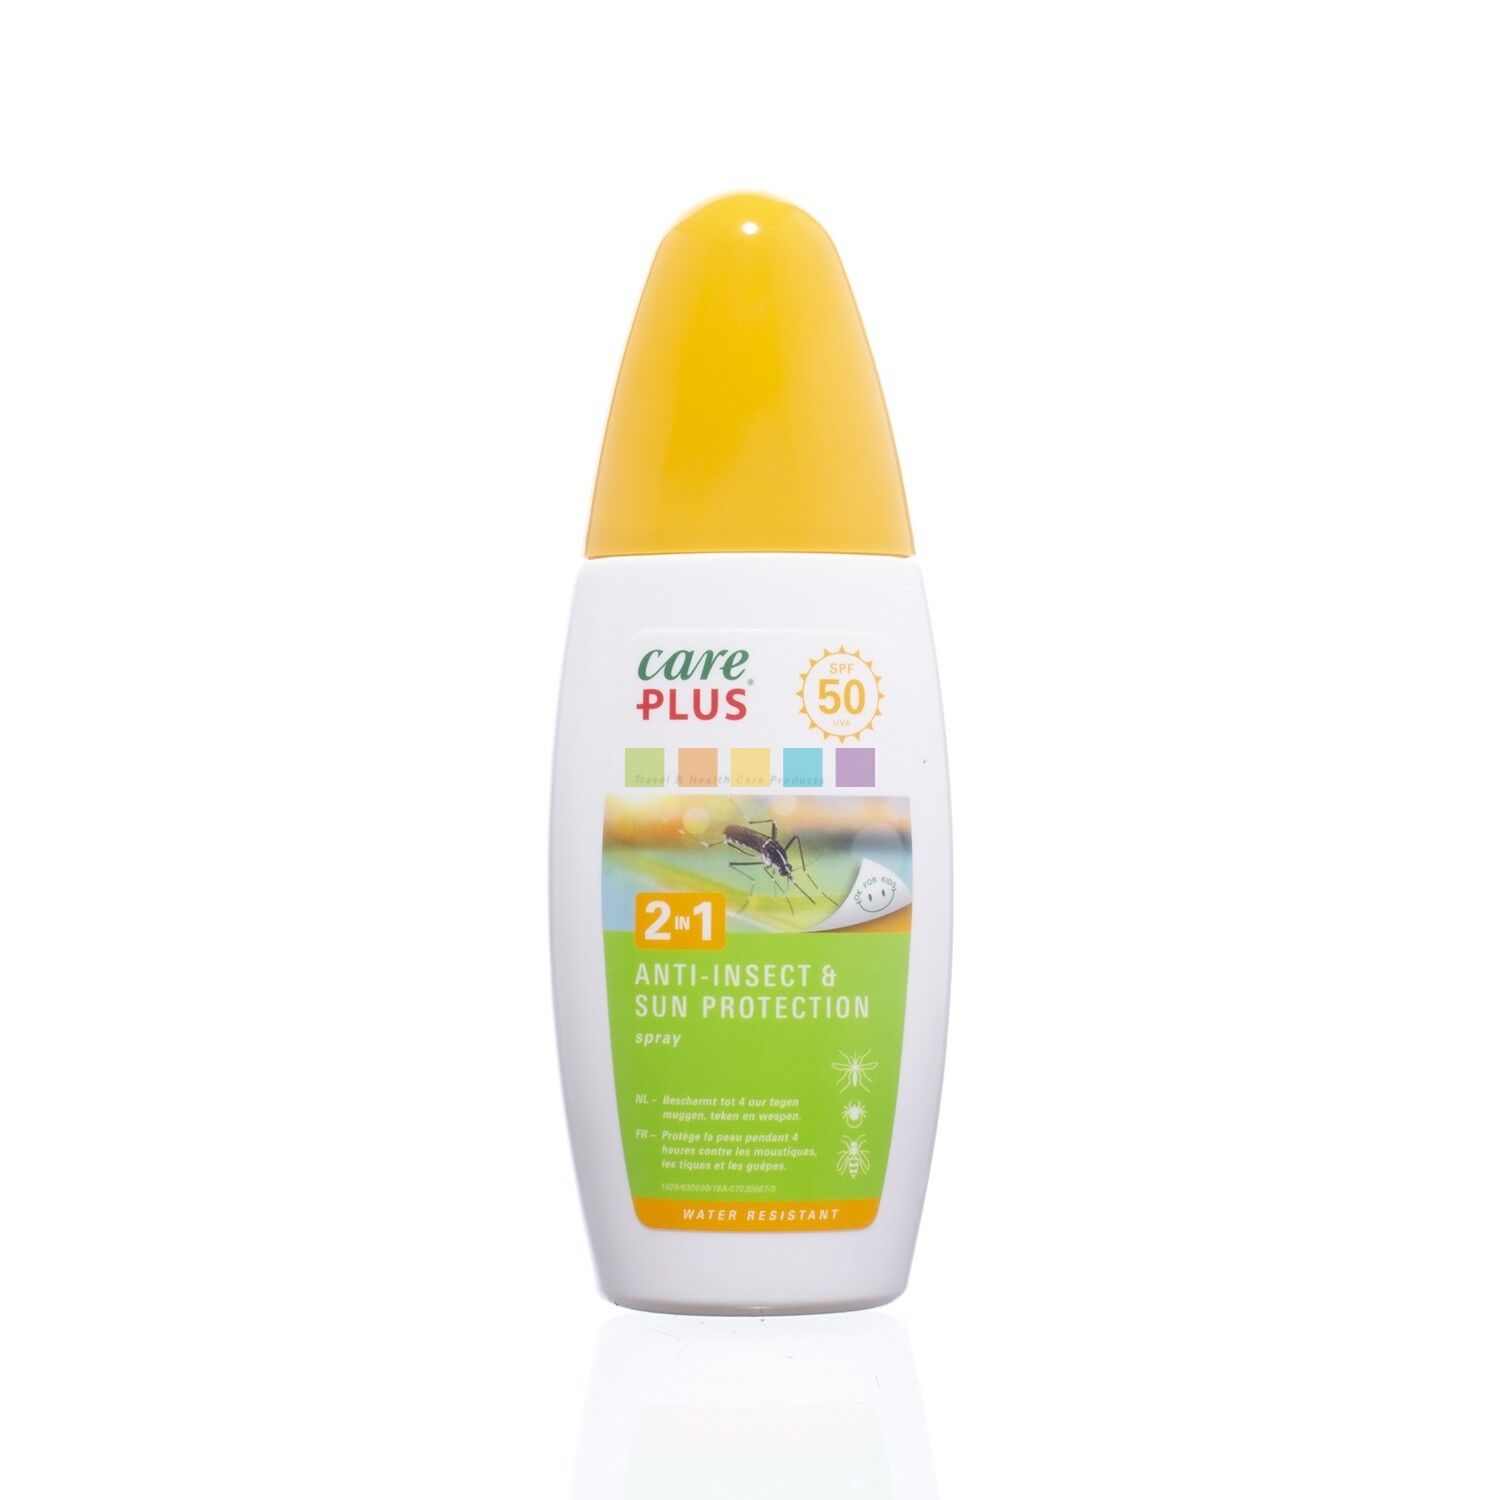 Care Plus 2in1 Anti-Insect & Sun Protection Spray SPF50 - Protección contra insectos